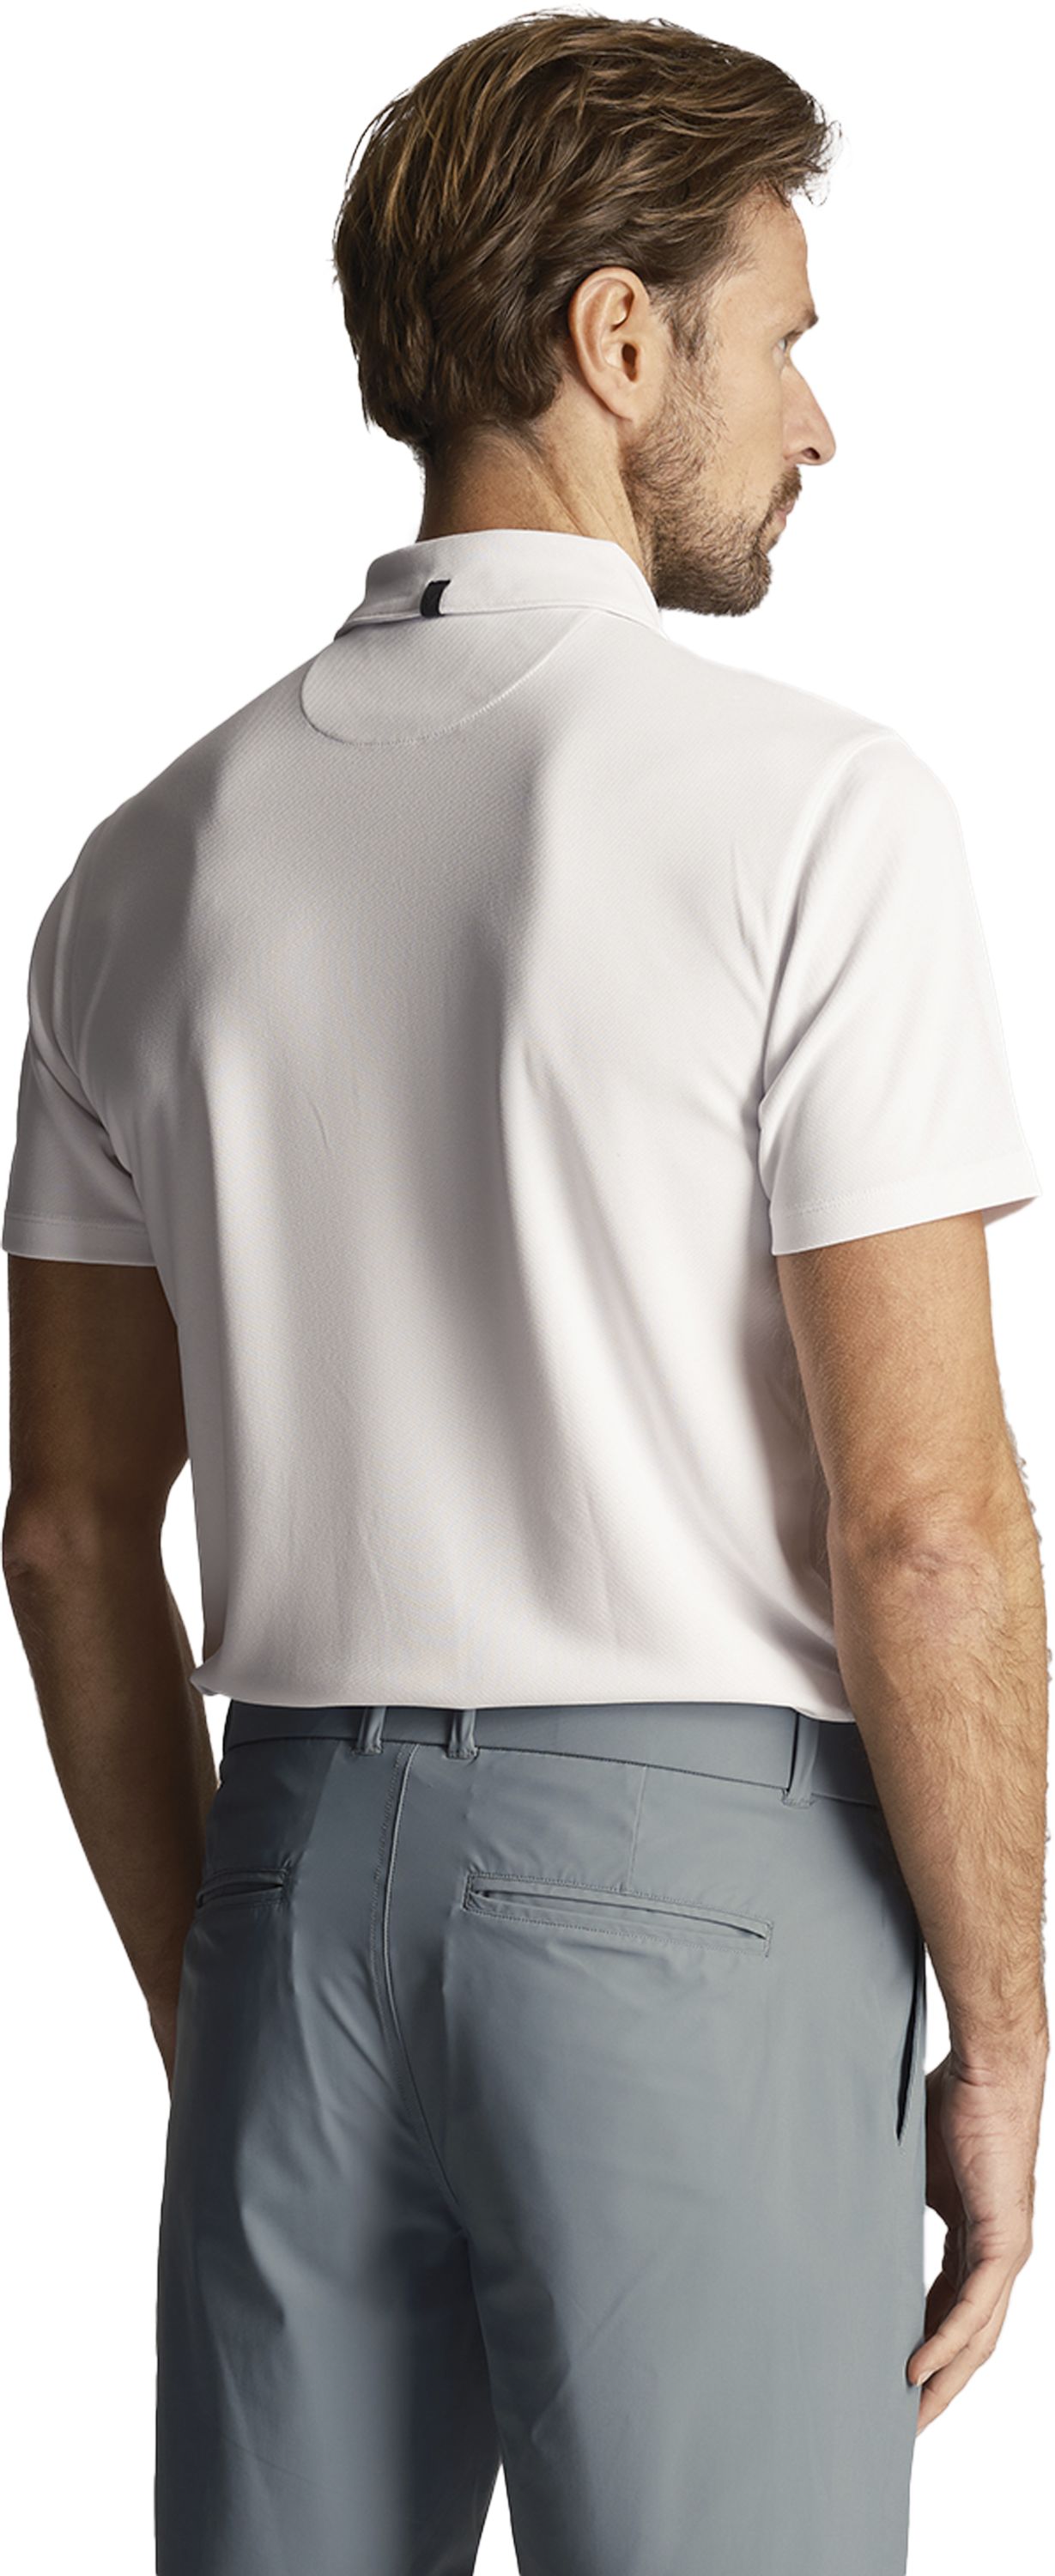 LYLE & SCOTT, Tech Collar Logo Polo Shirt